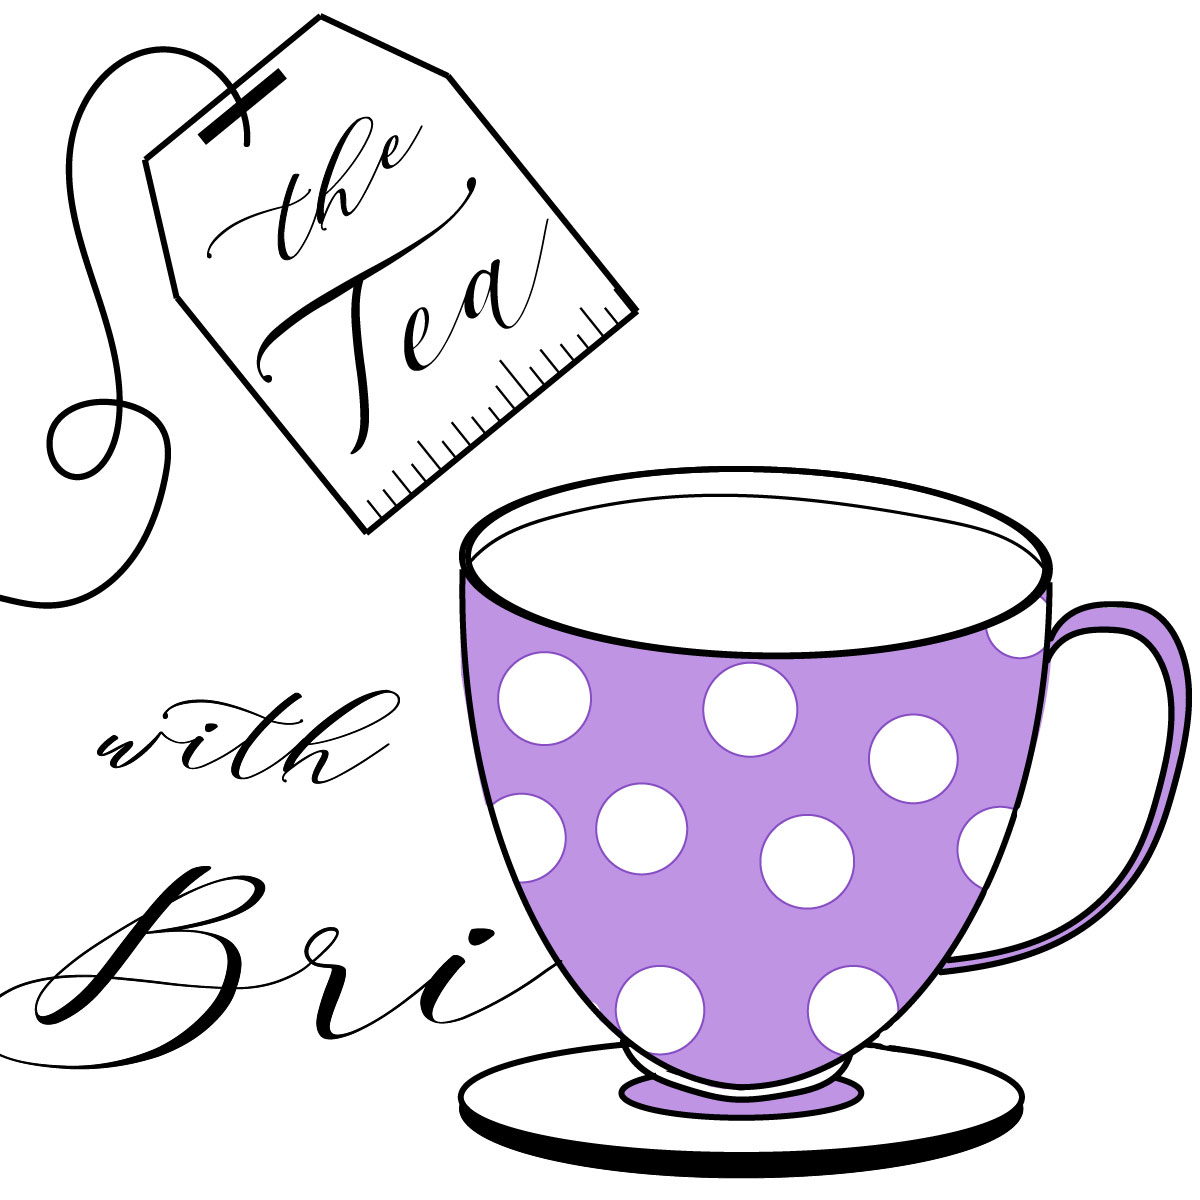 1. The Tea with Bri and Noah